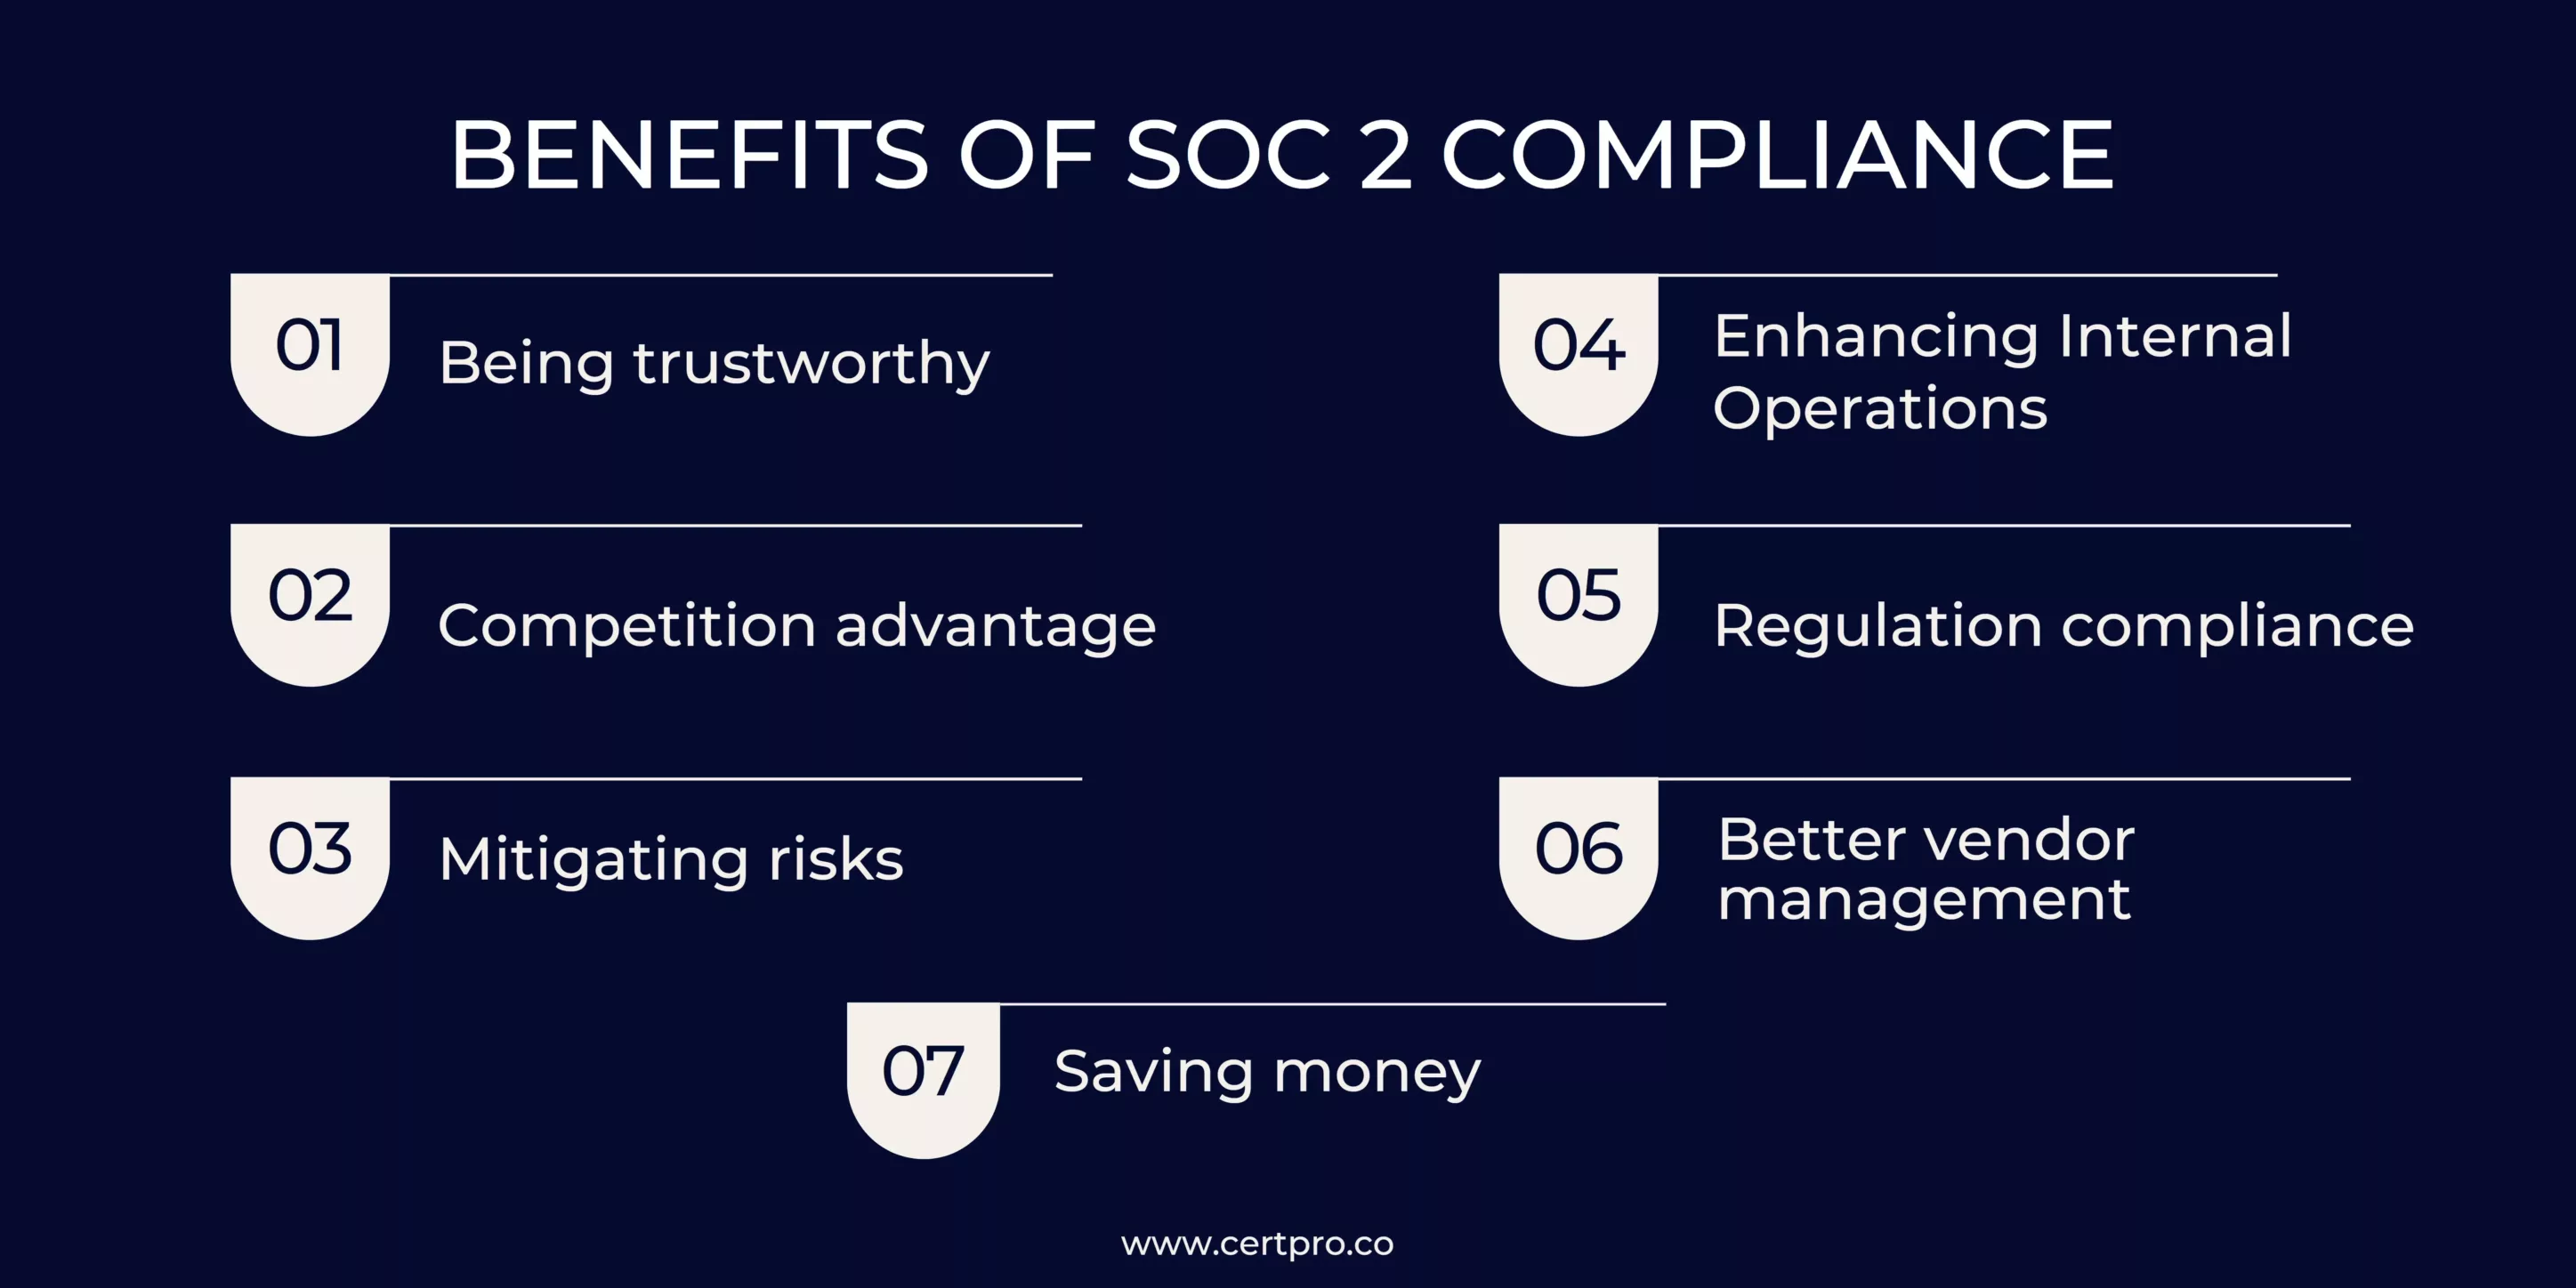 BENEFITS OF SOC2 COMPLIANCE